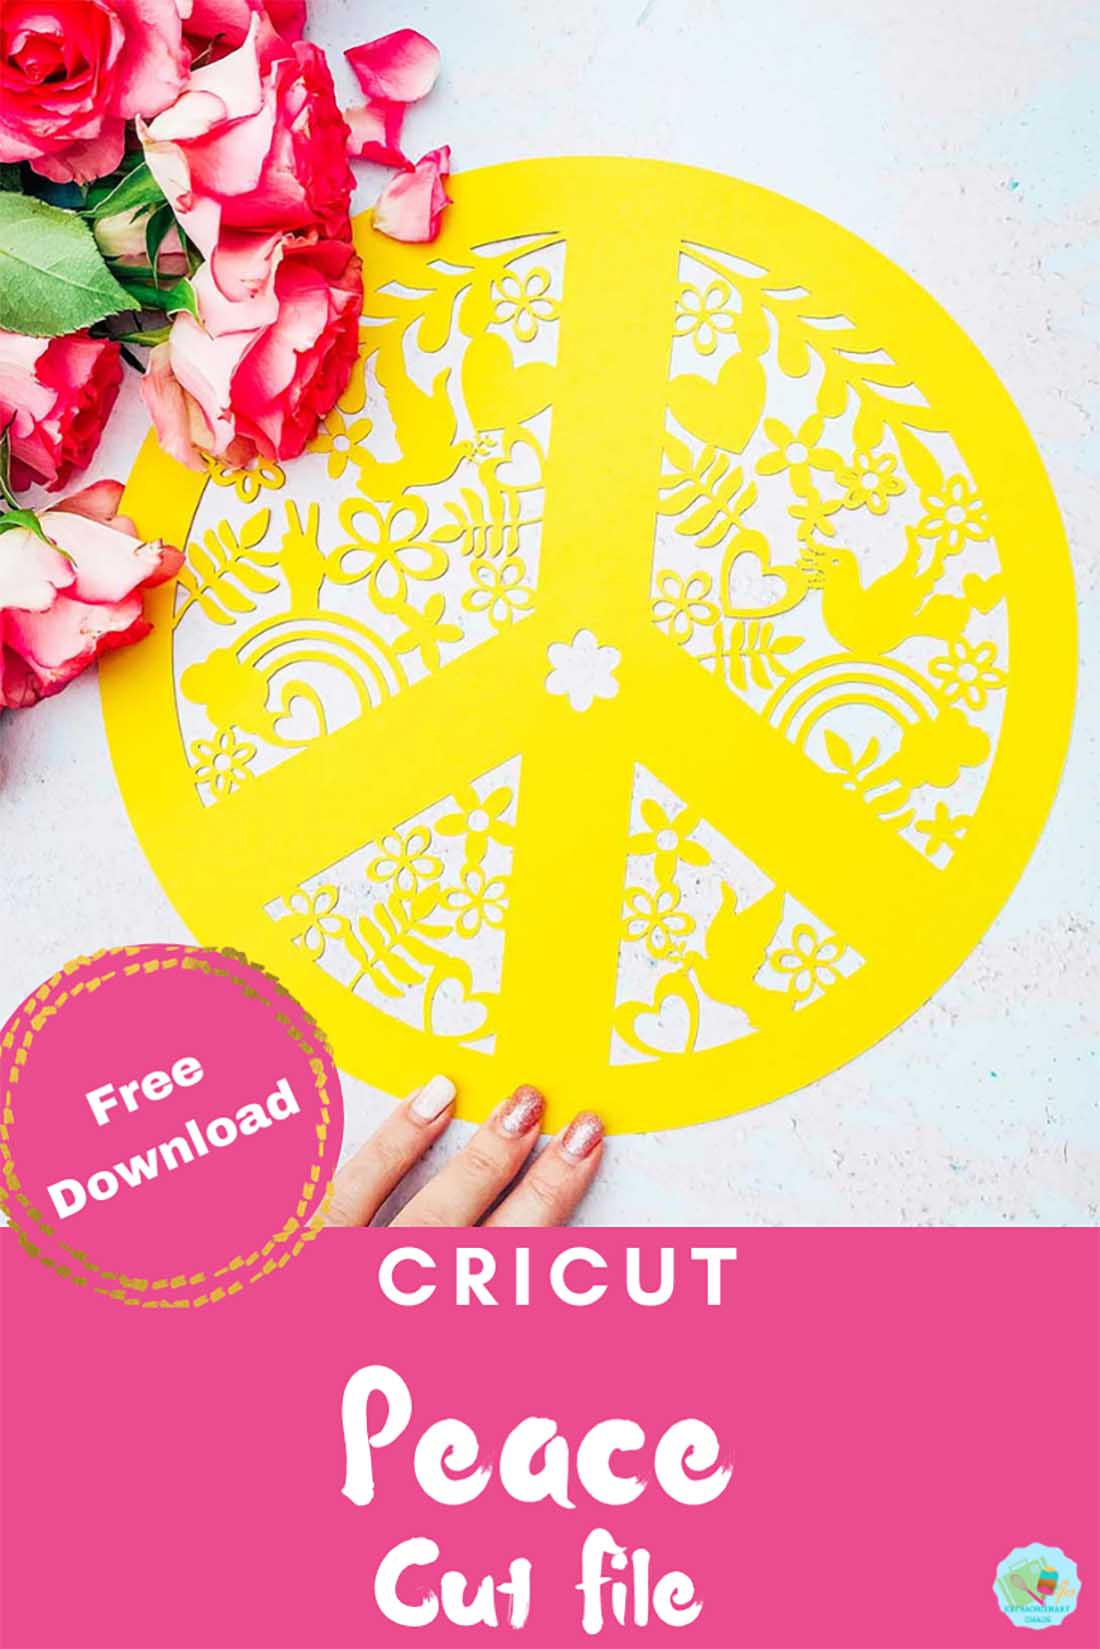 Free downloadable Cricut peace cut file